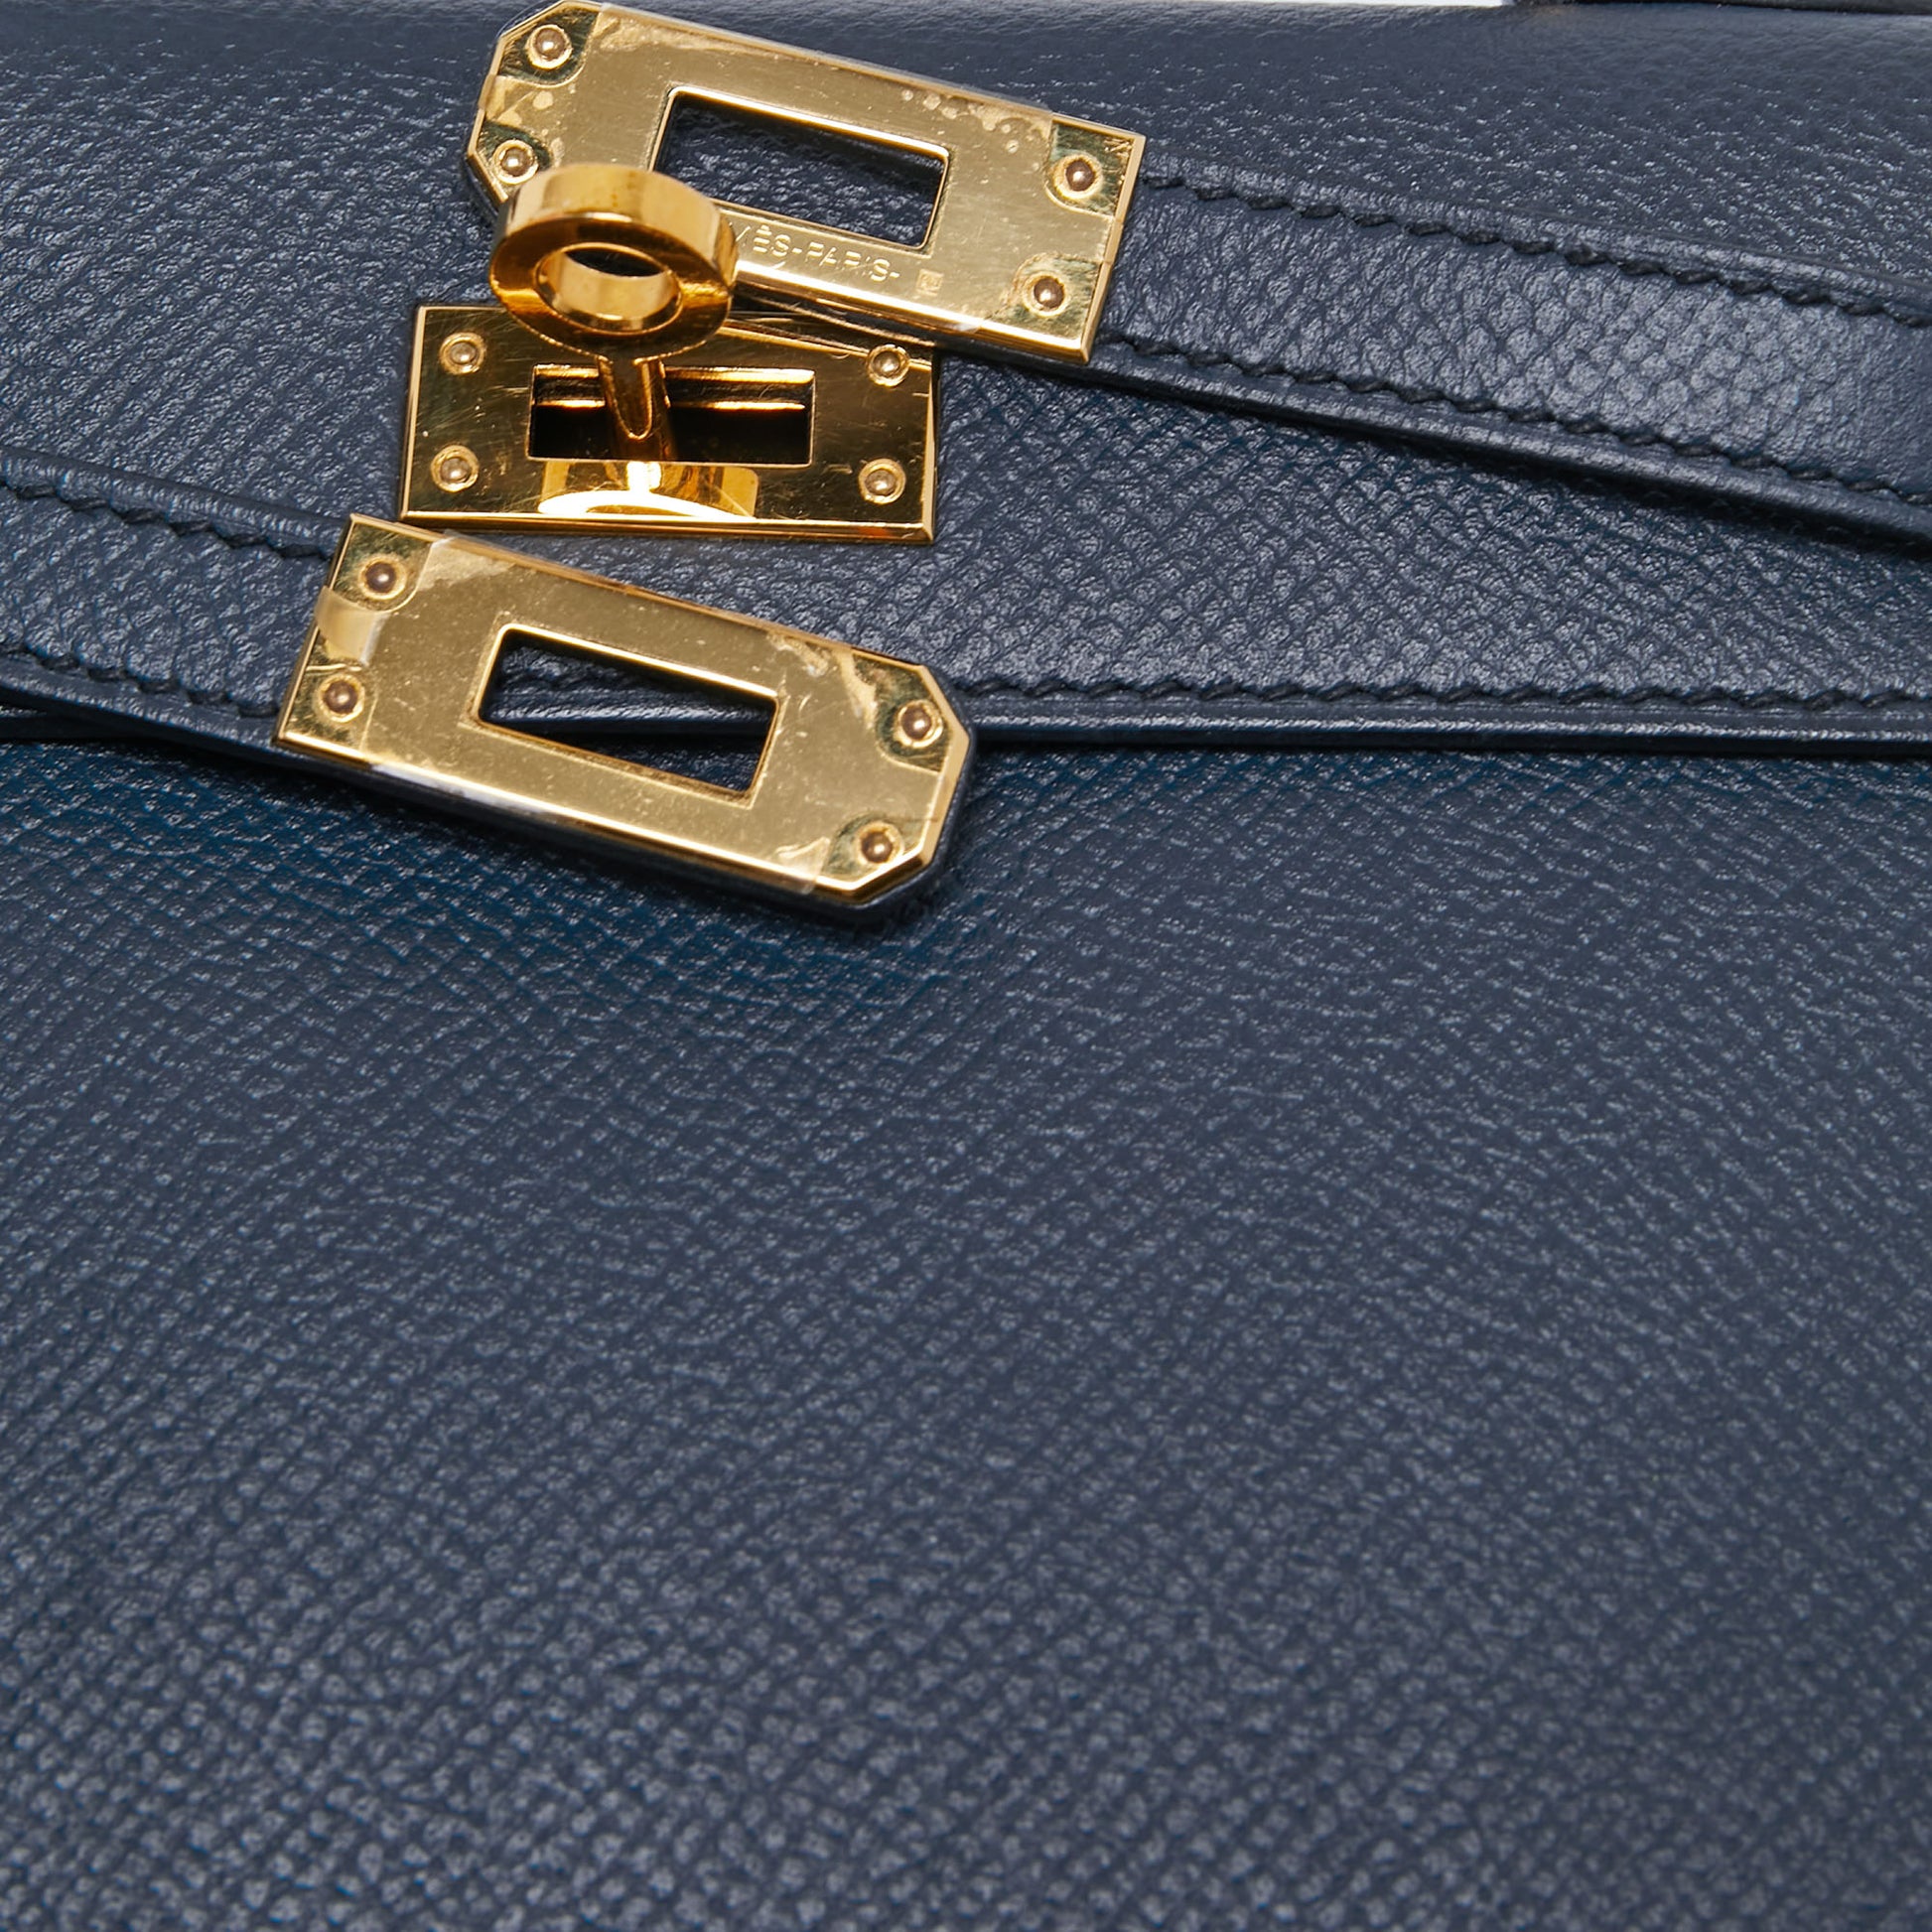 Hermès Kelly 20 Mini Sellier Epsom Bleu Nuit PHW - Kaialux